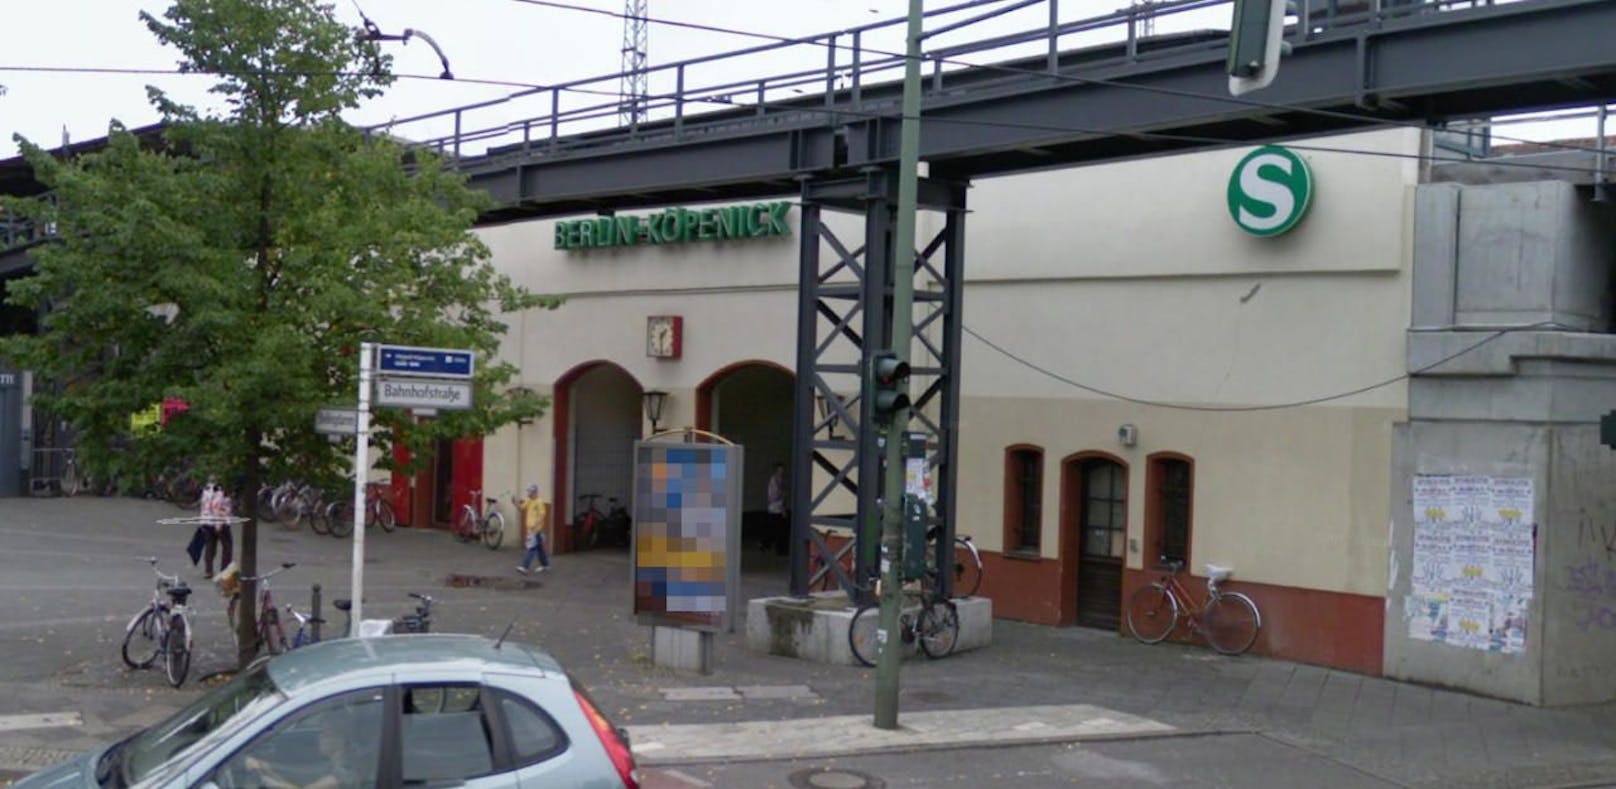 Der Bahnhof Berlin-Köpenick.